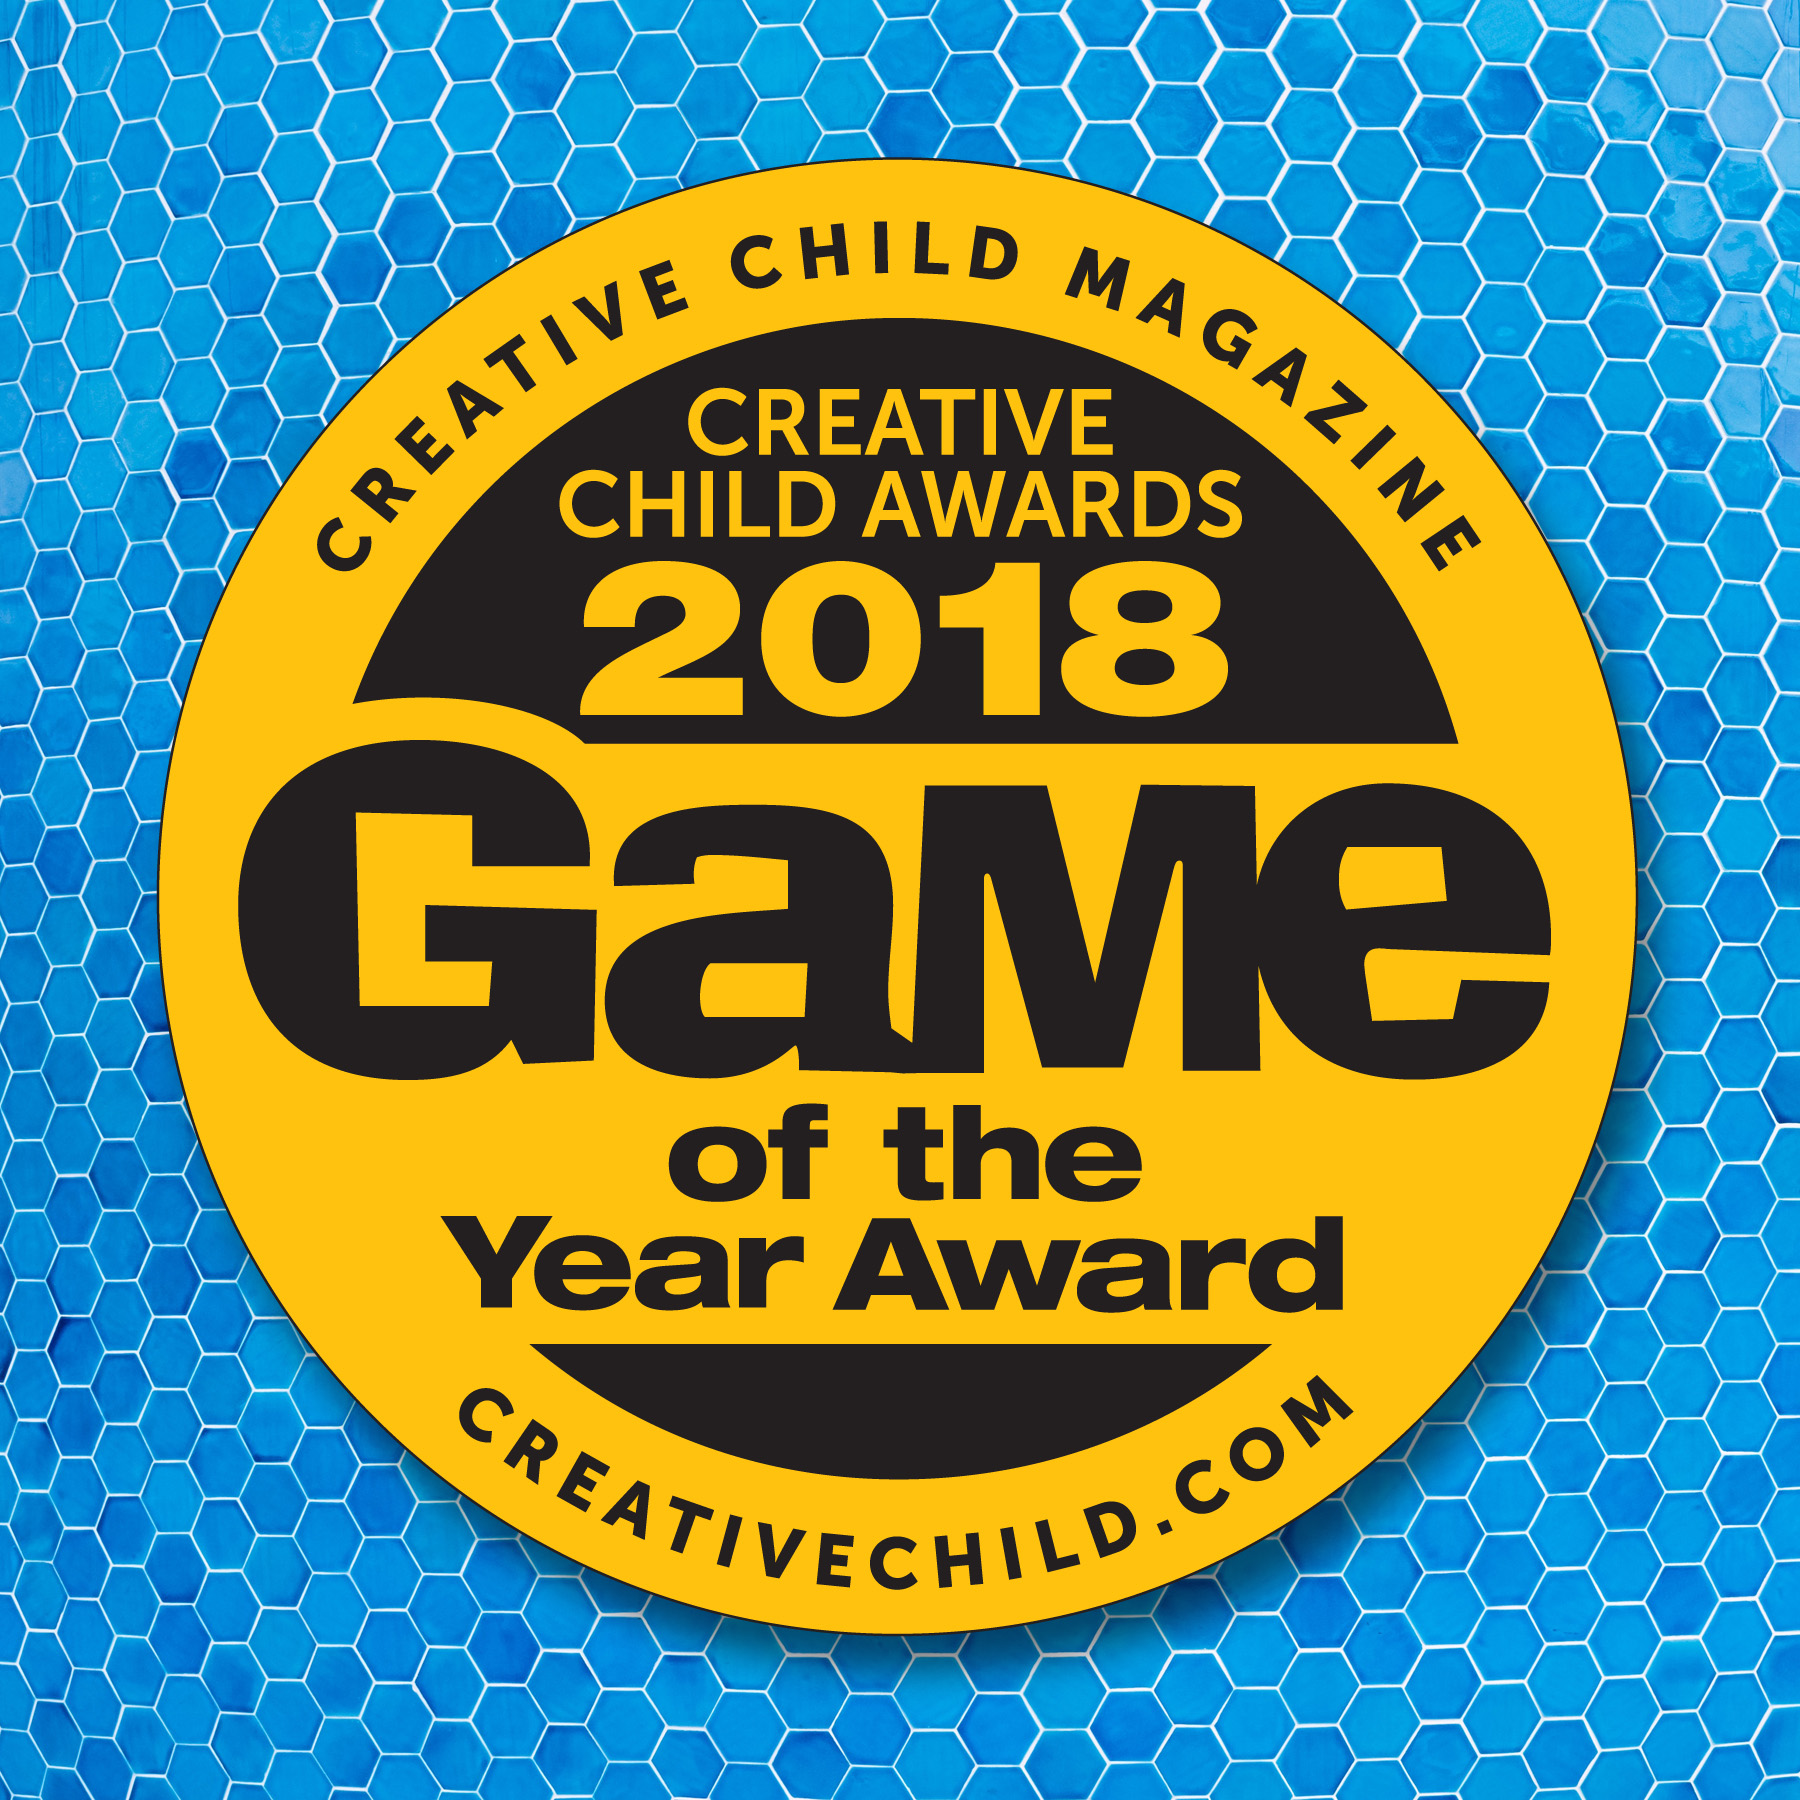 Candygrams-Family-Board-Games-Word-Game-Award-Winning-Gift-Creative-Child-Unsplash.jpg